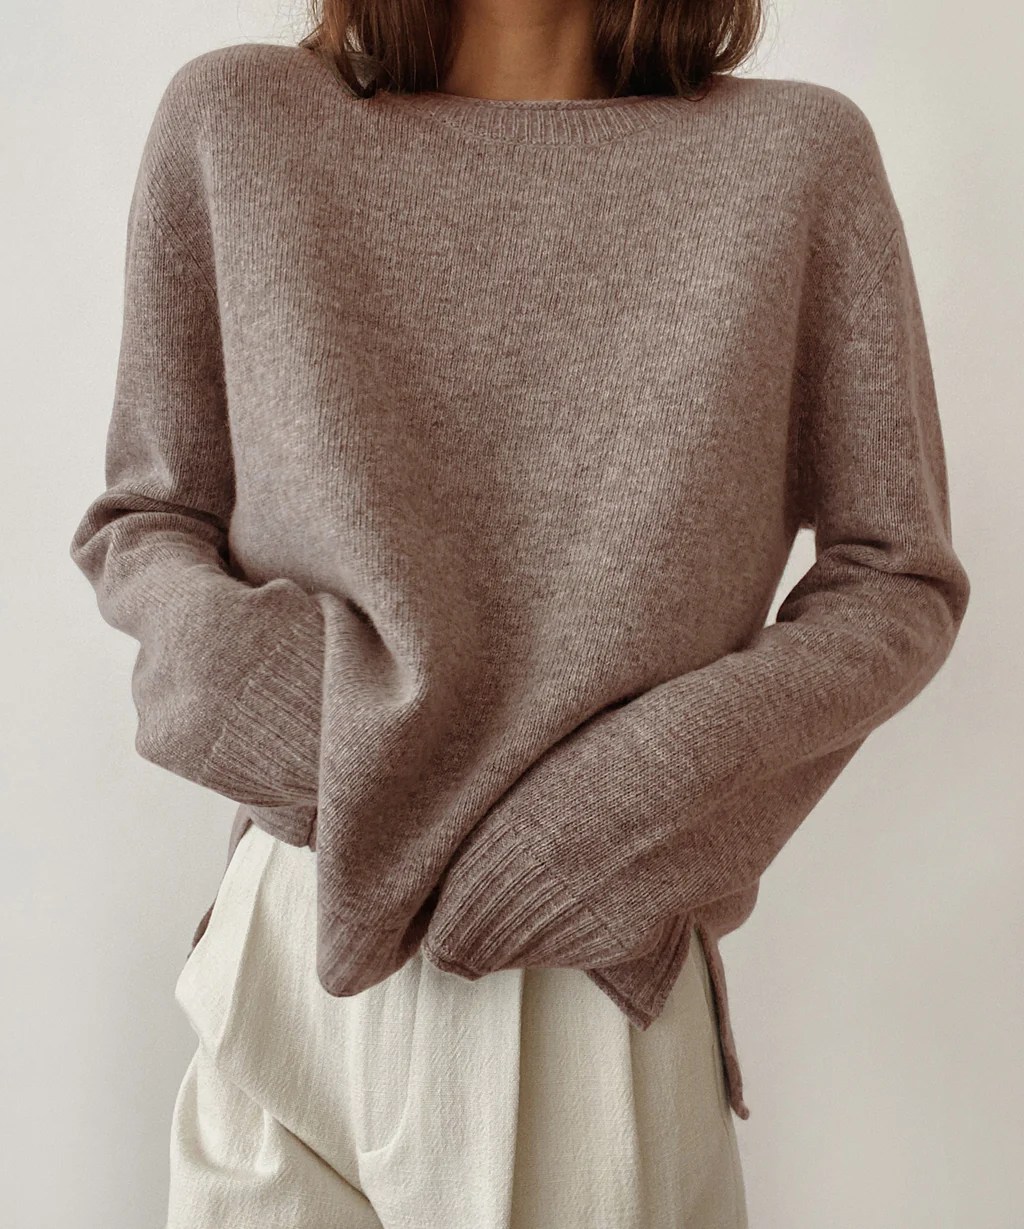 jenni kayne everyday sweater in taupe